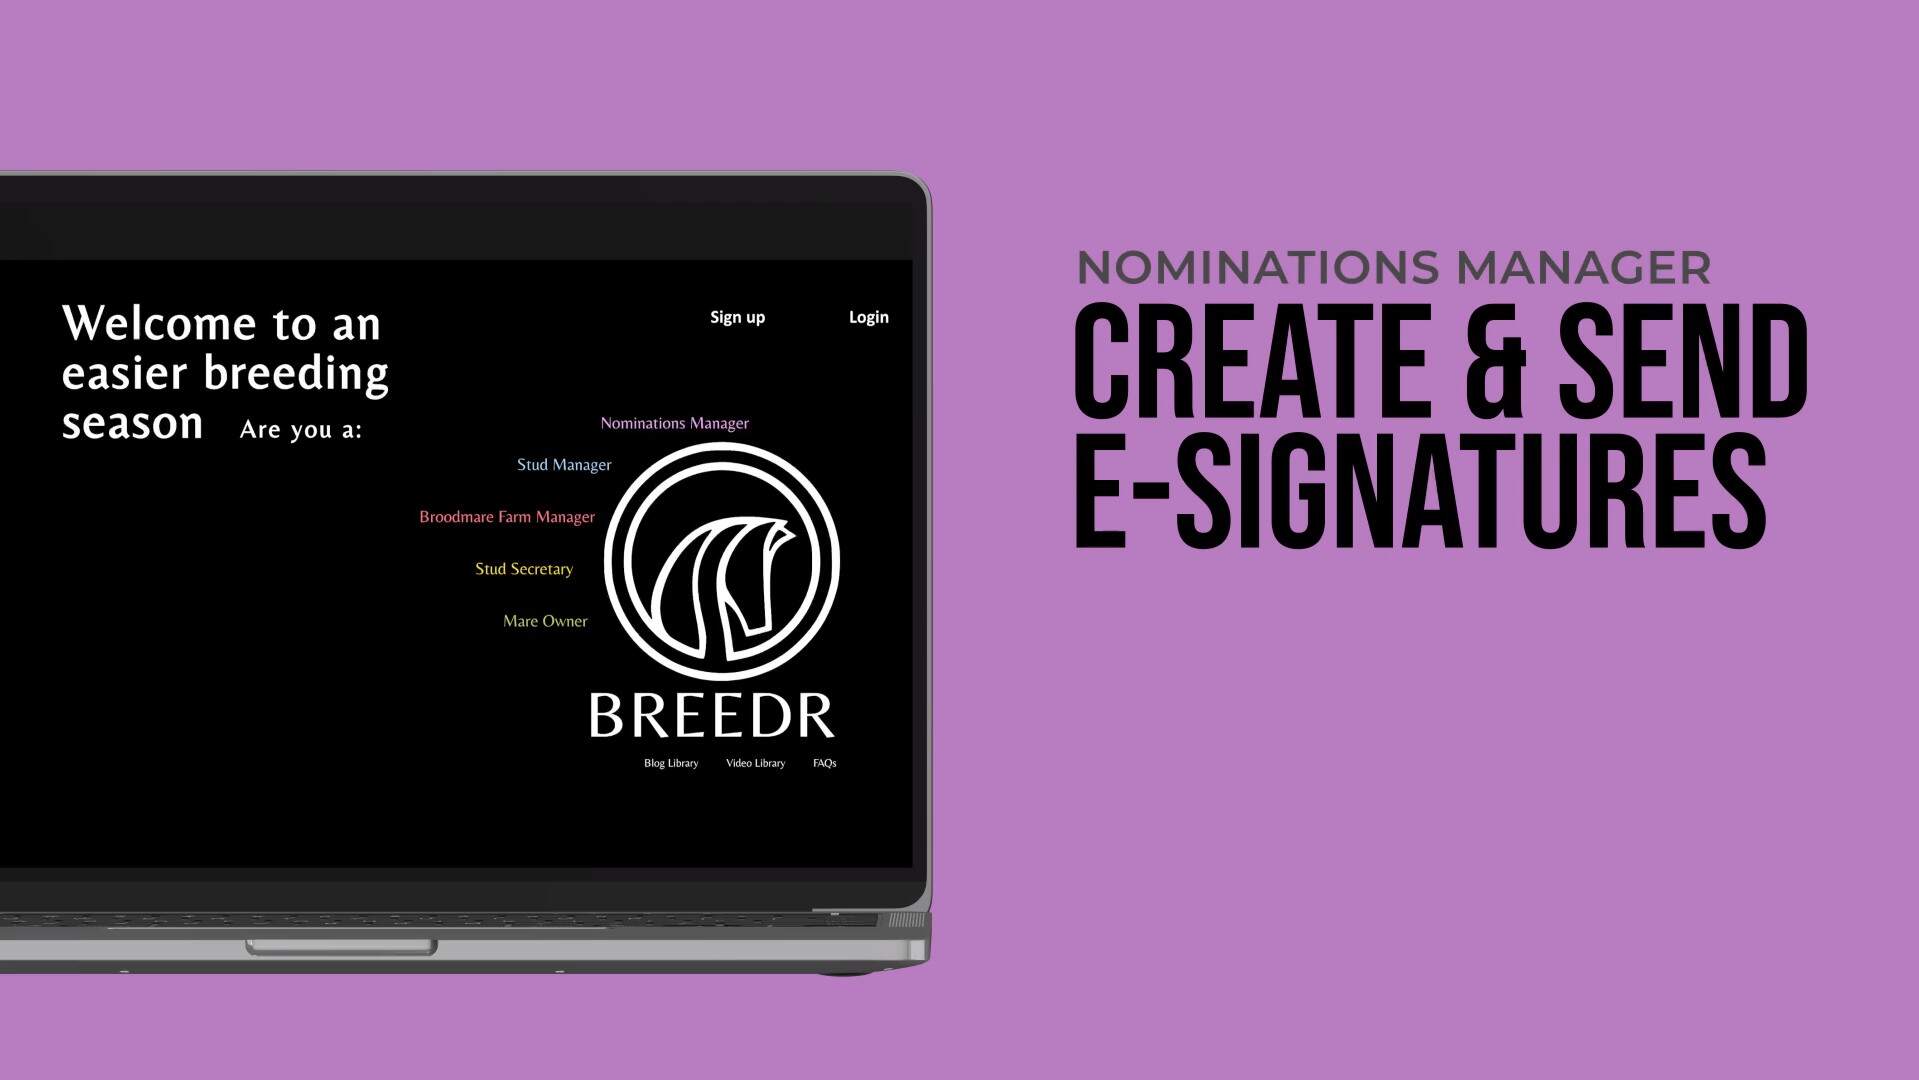 Nominations manager Create Send E-signatures